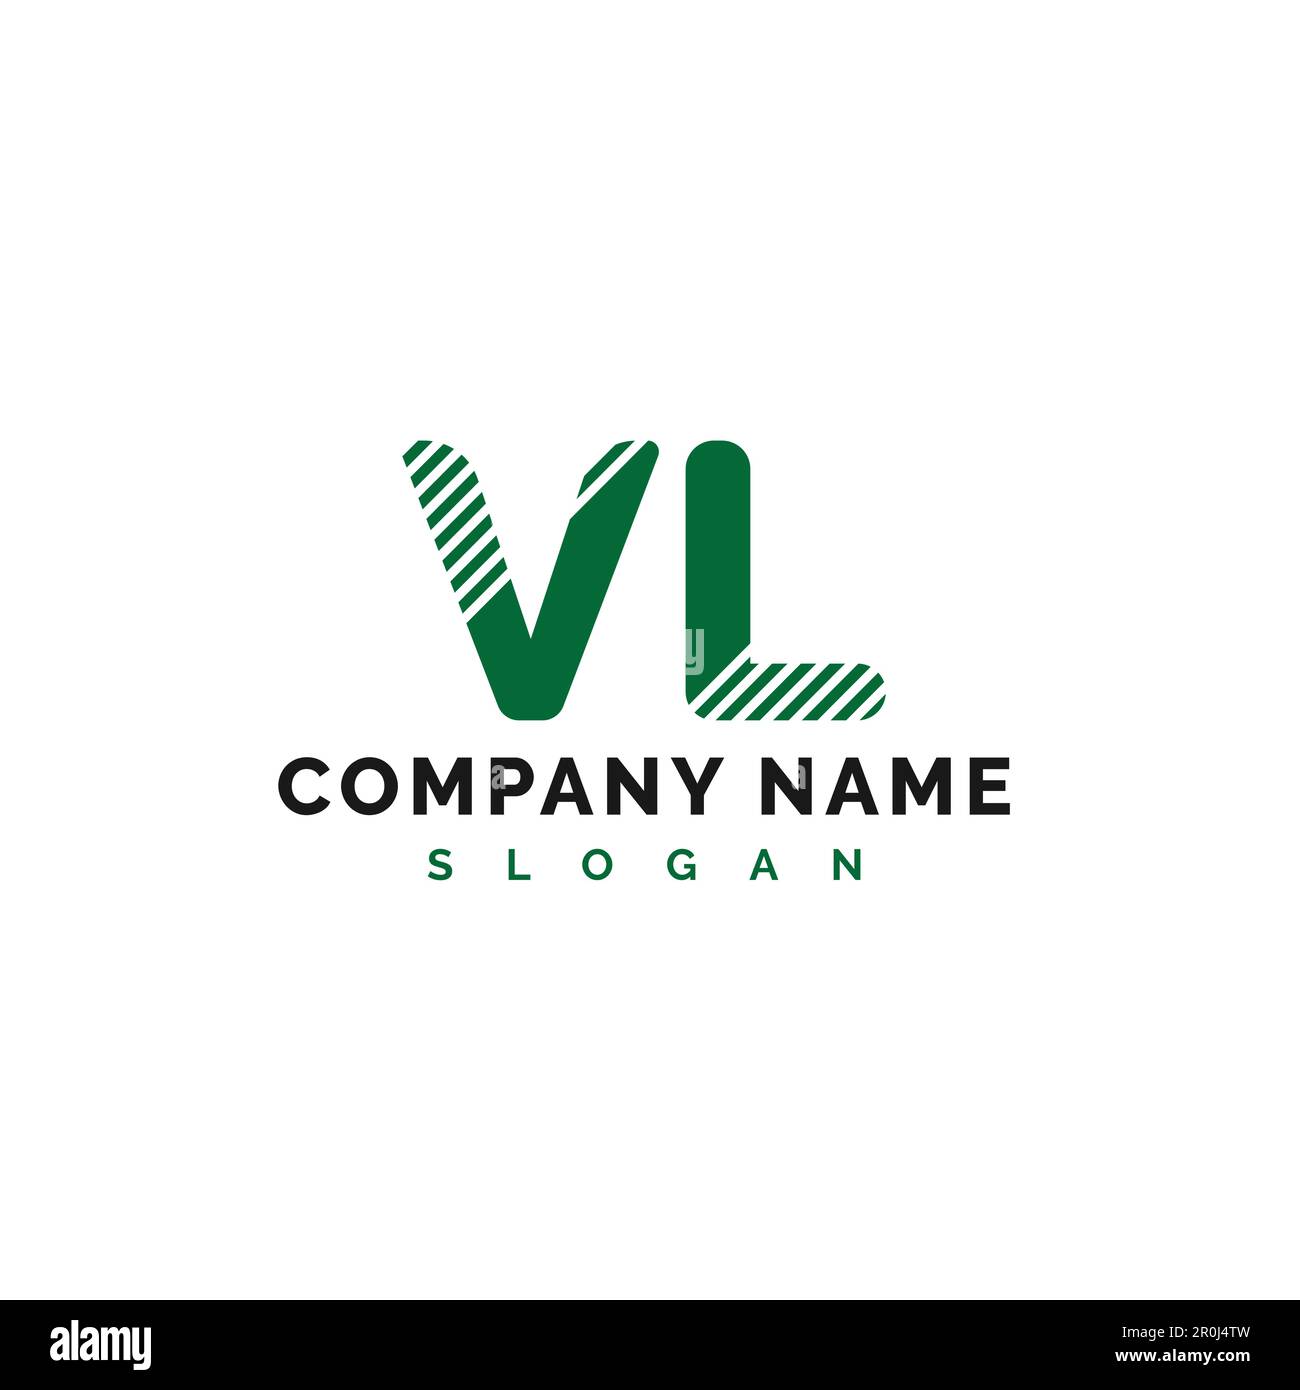 Vl Logos Cliparts, Stock Vector and Royalty Free Vl Logos Illustrations